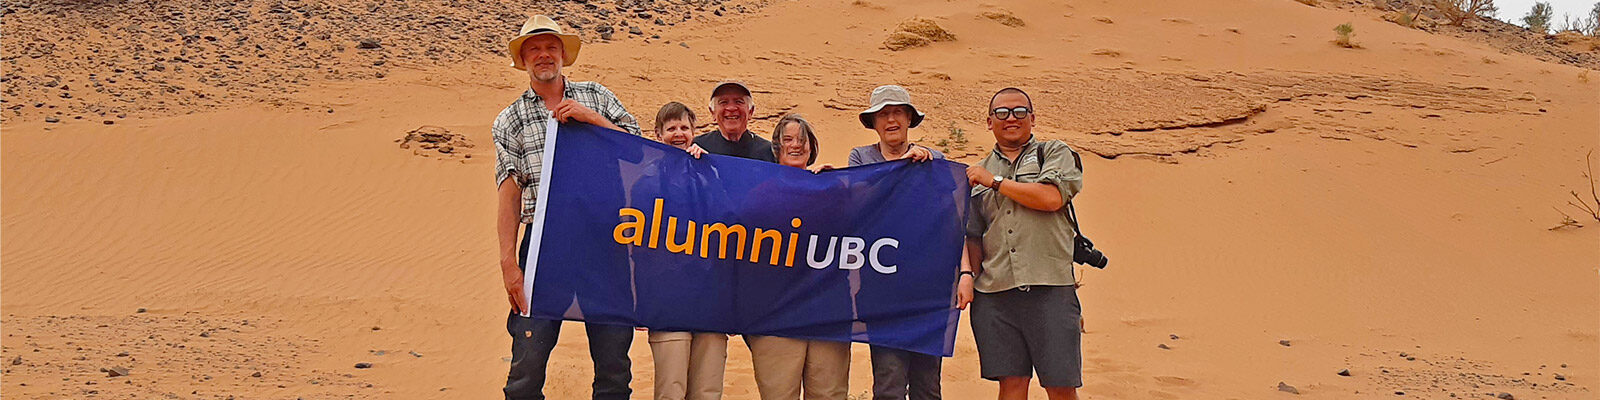 alumni UBC Travel Club